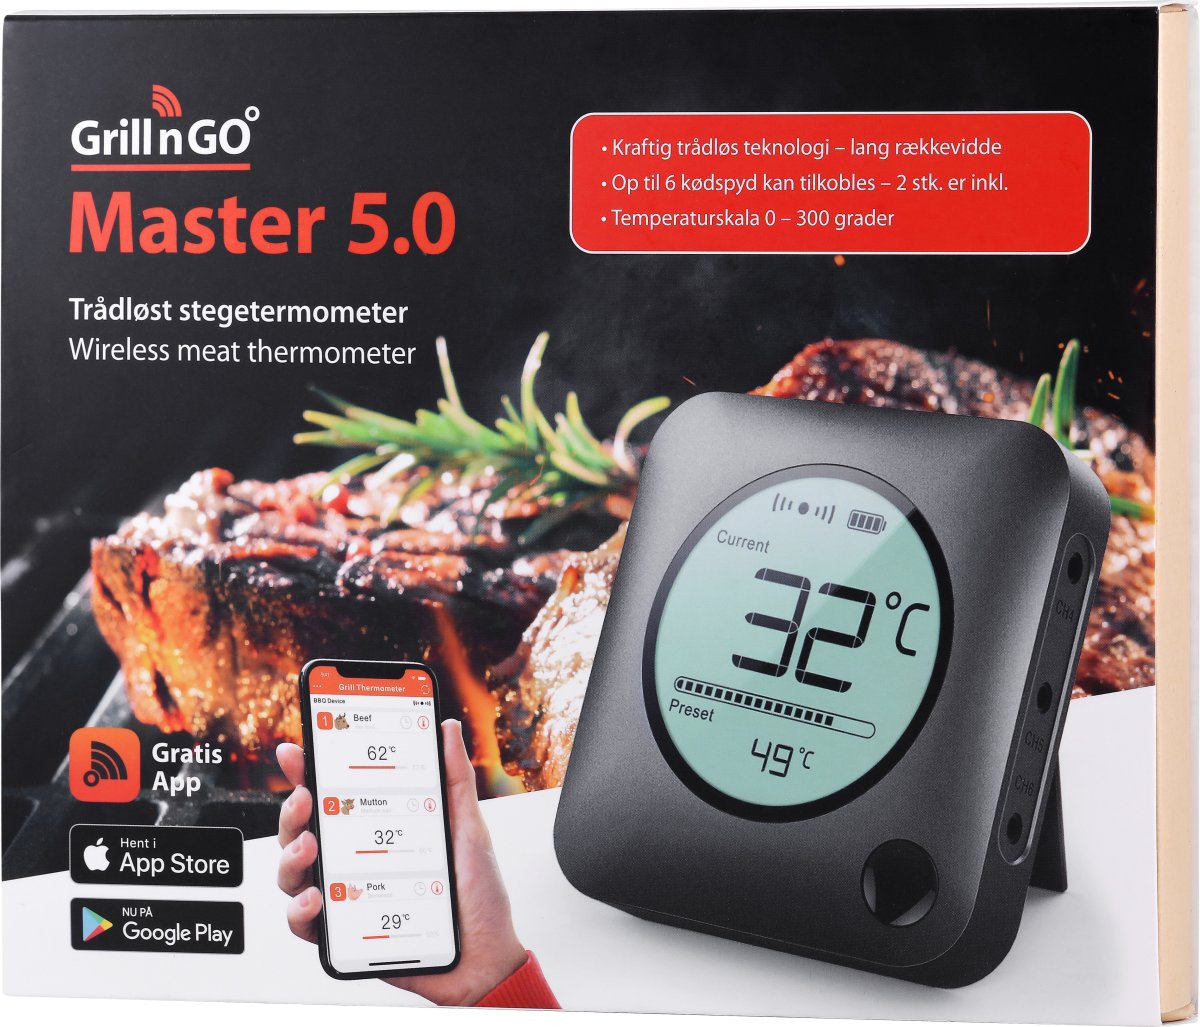 Grill'n'go Master 5.0 trådlös stektermometer